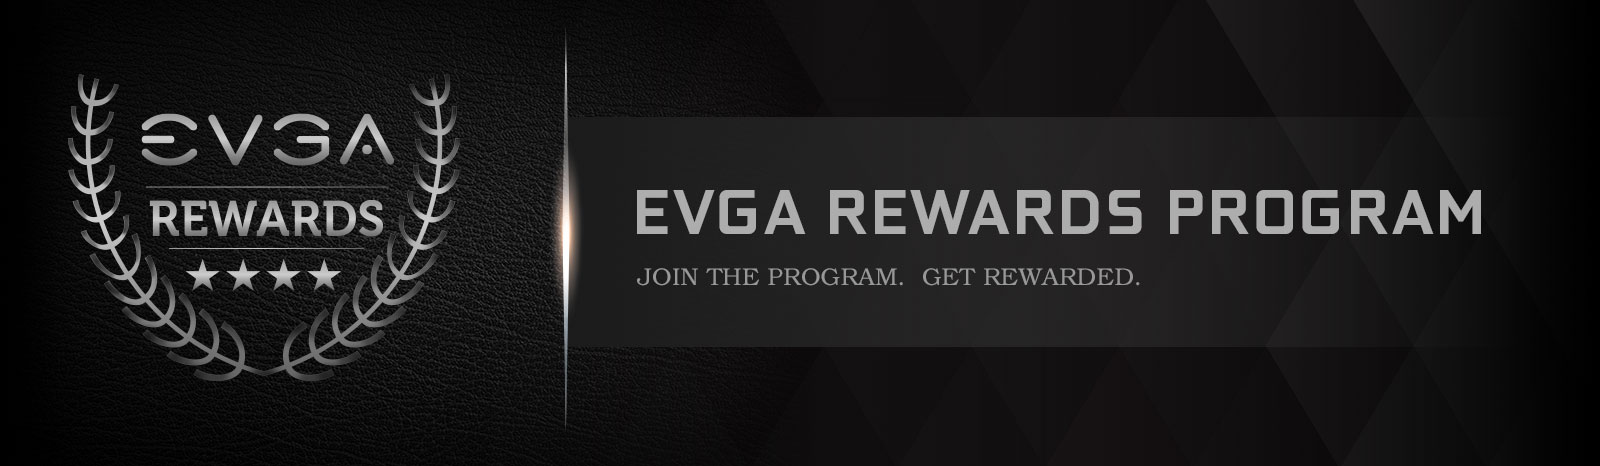 EVGA Rewards Program Header